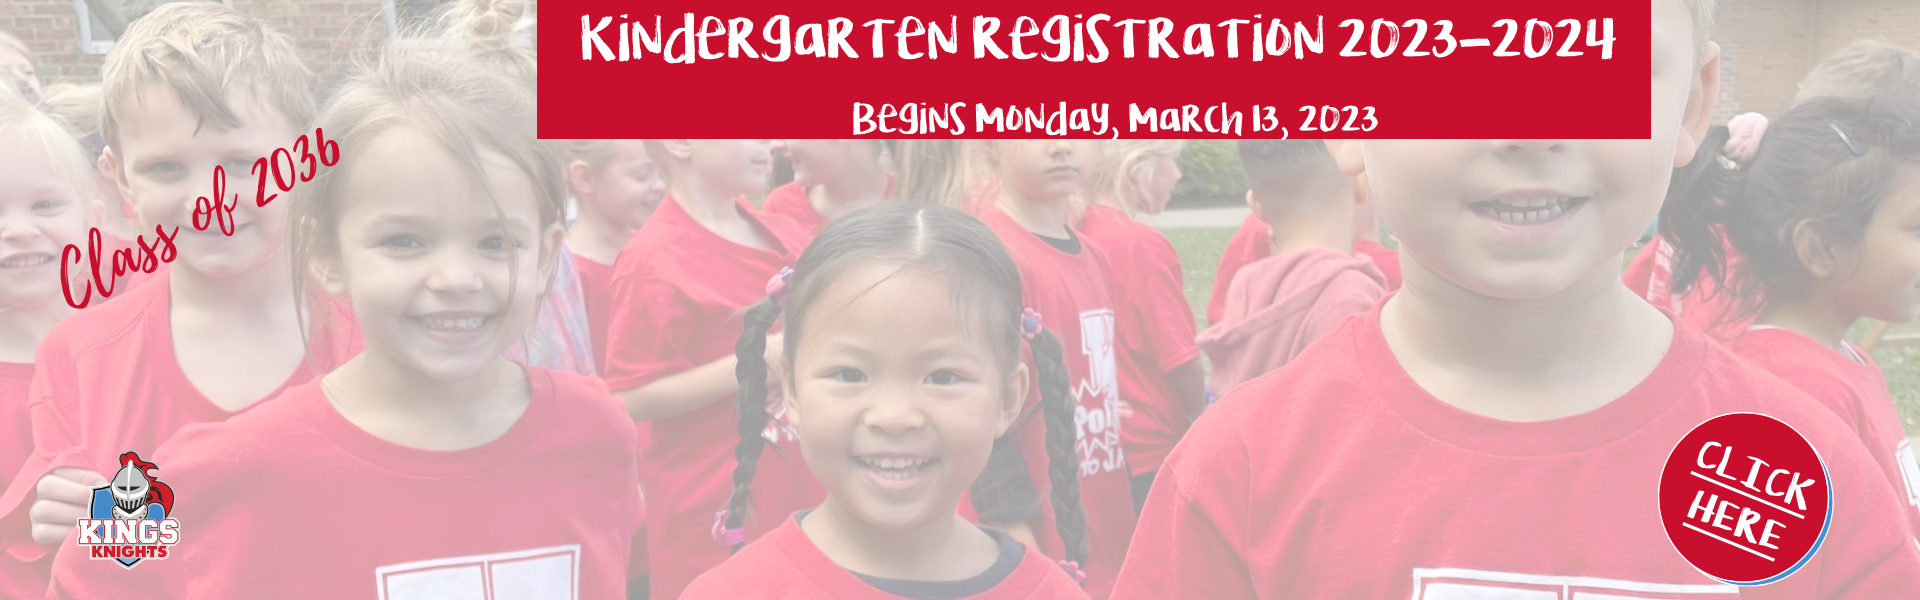 kindergarten registration begins March 13